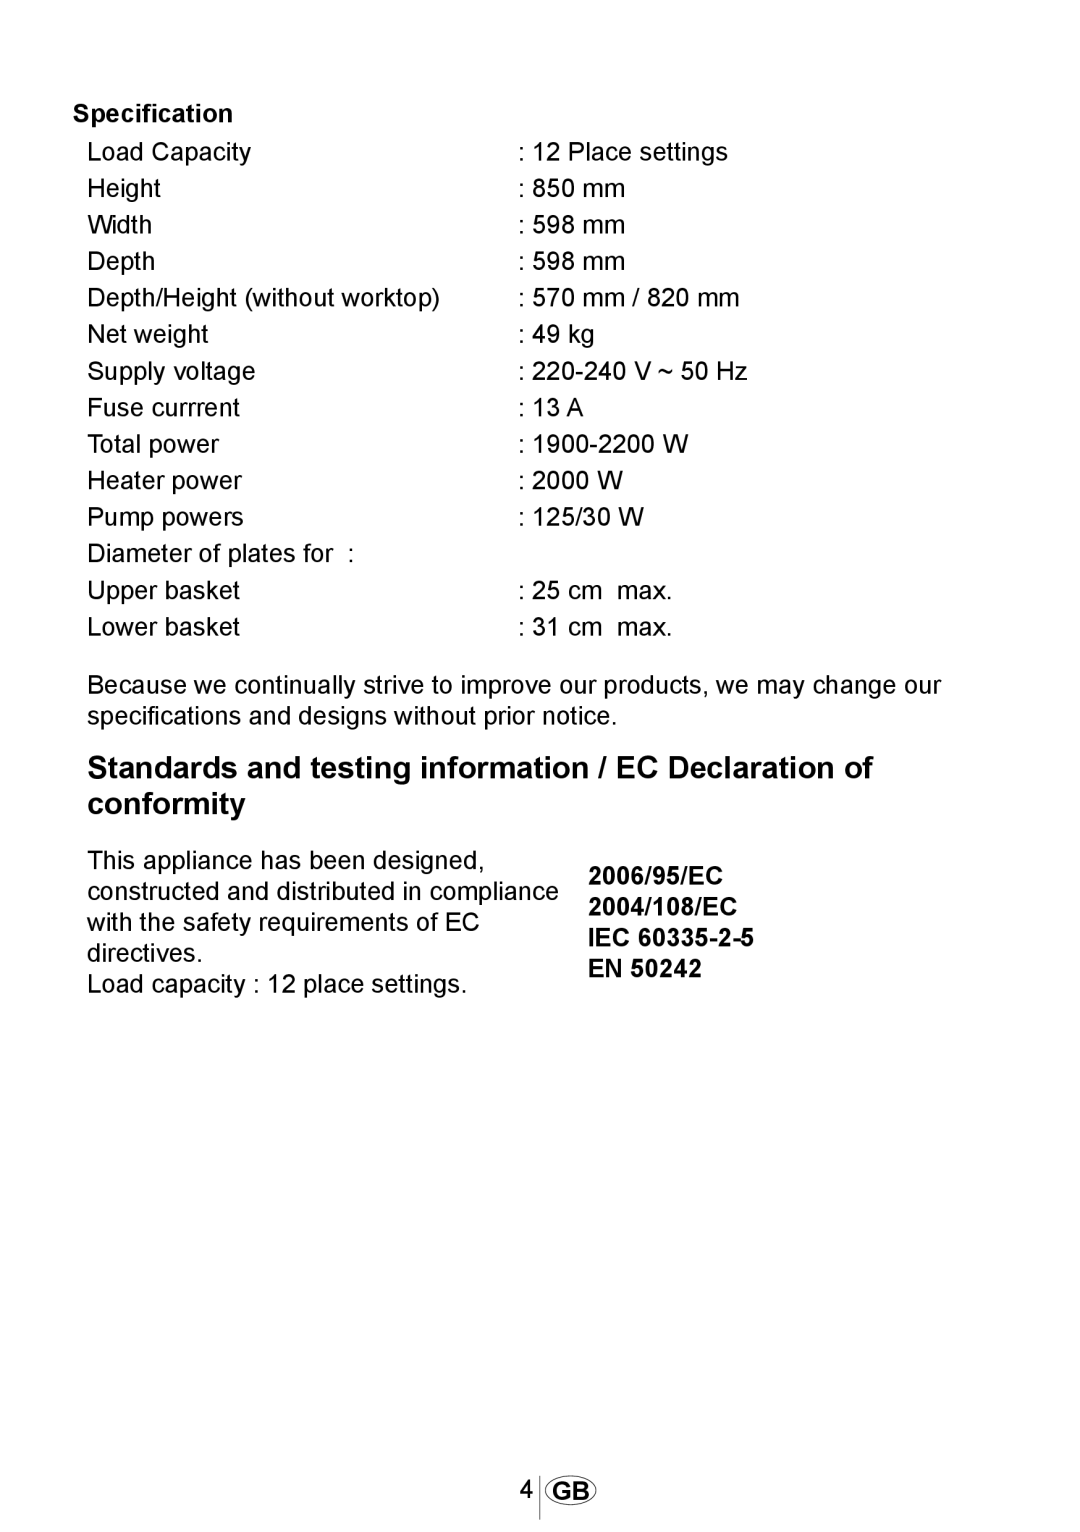 Beko DSFN1530 manual Standards and testing information / EC Declaration of conformity, Specification 